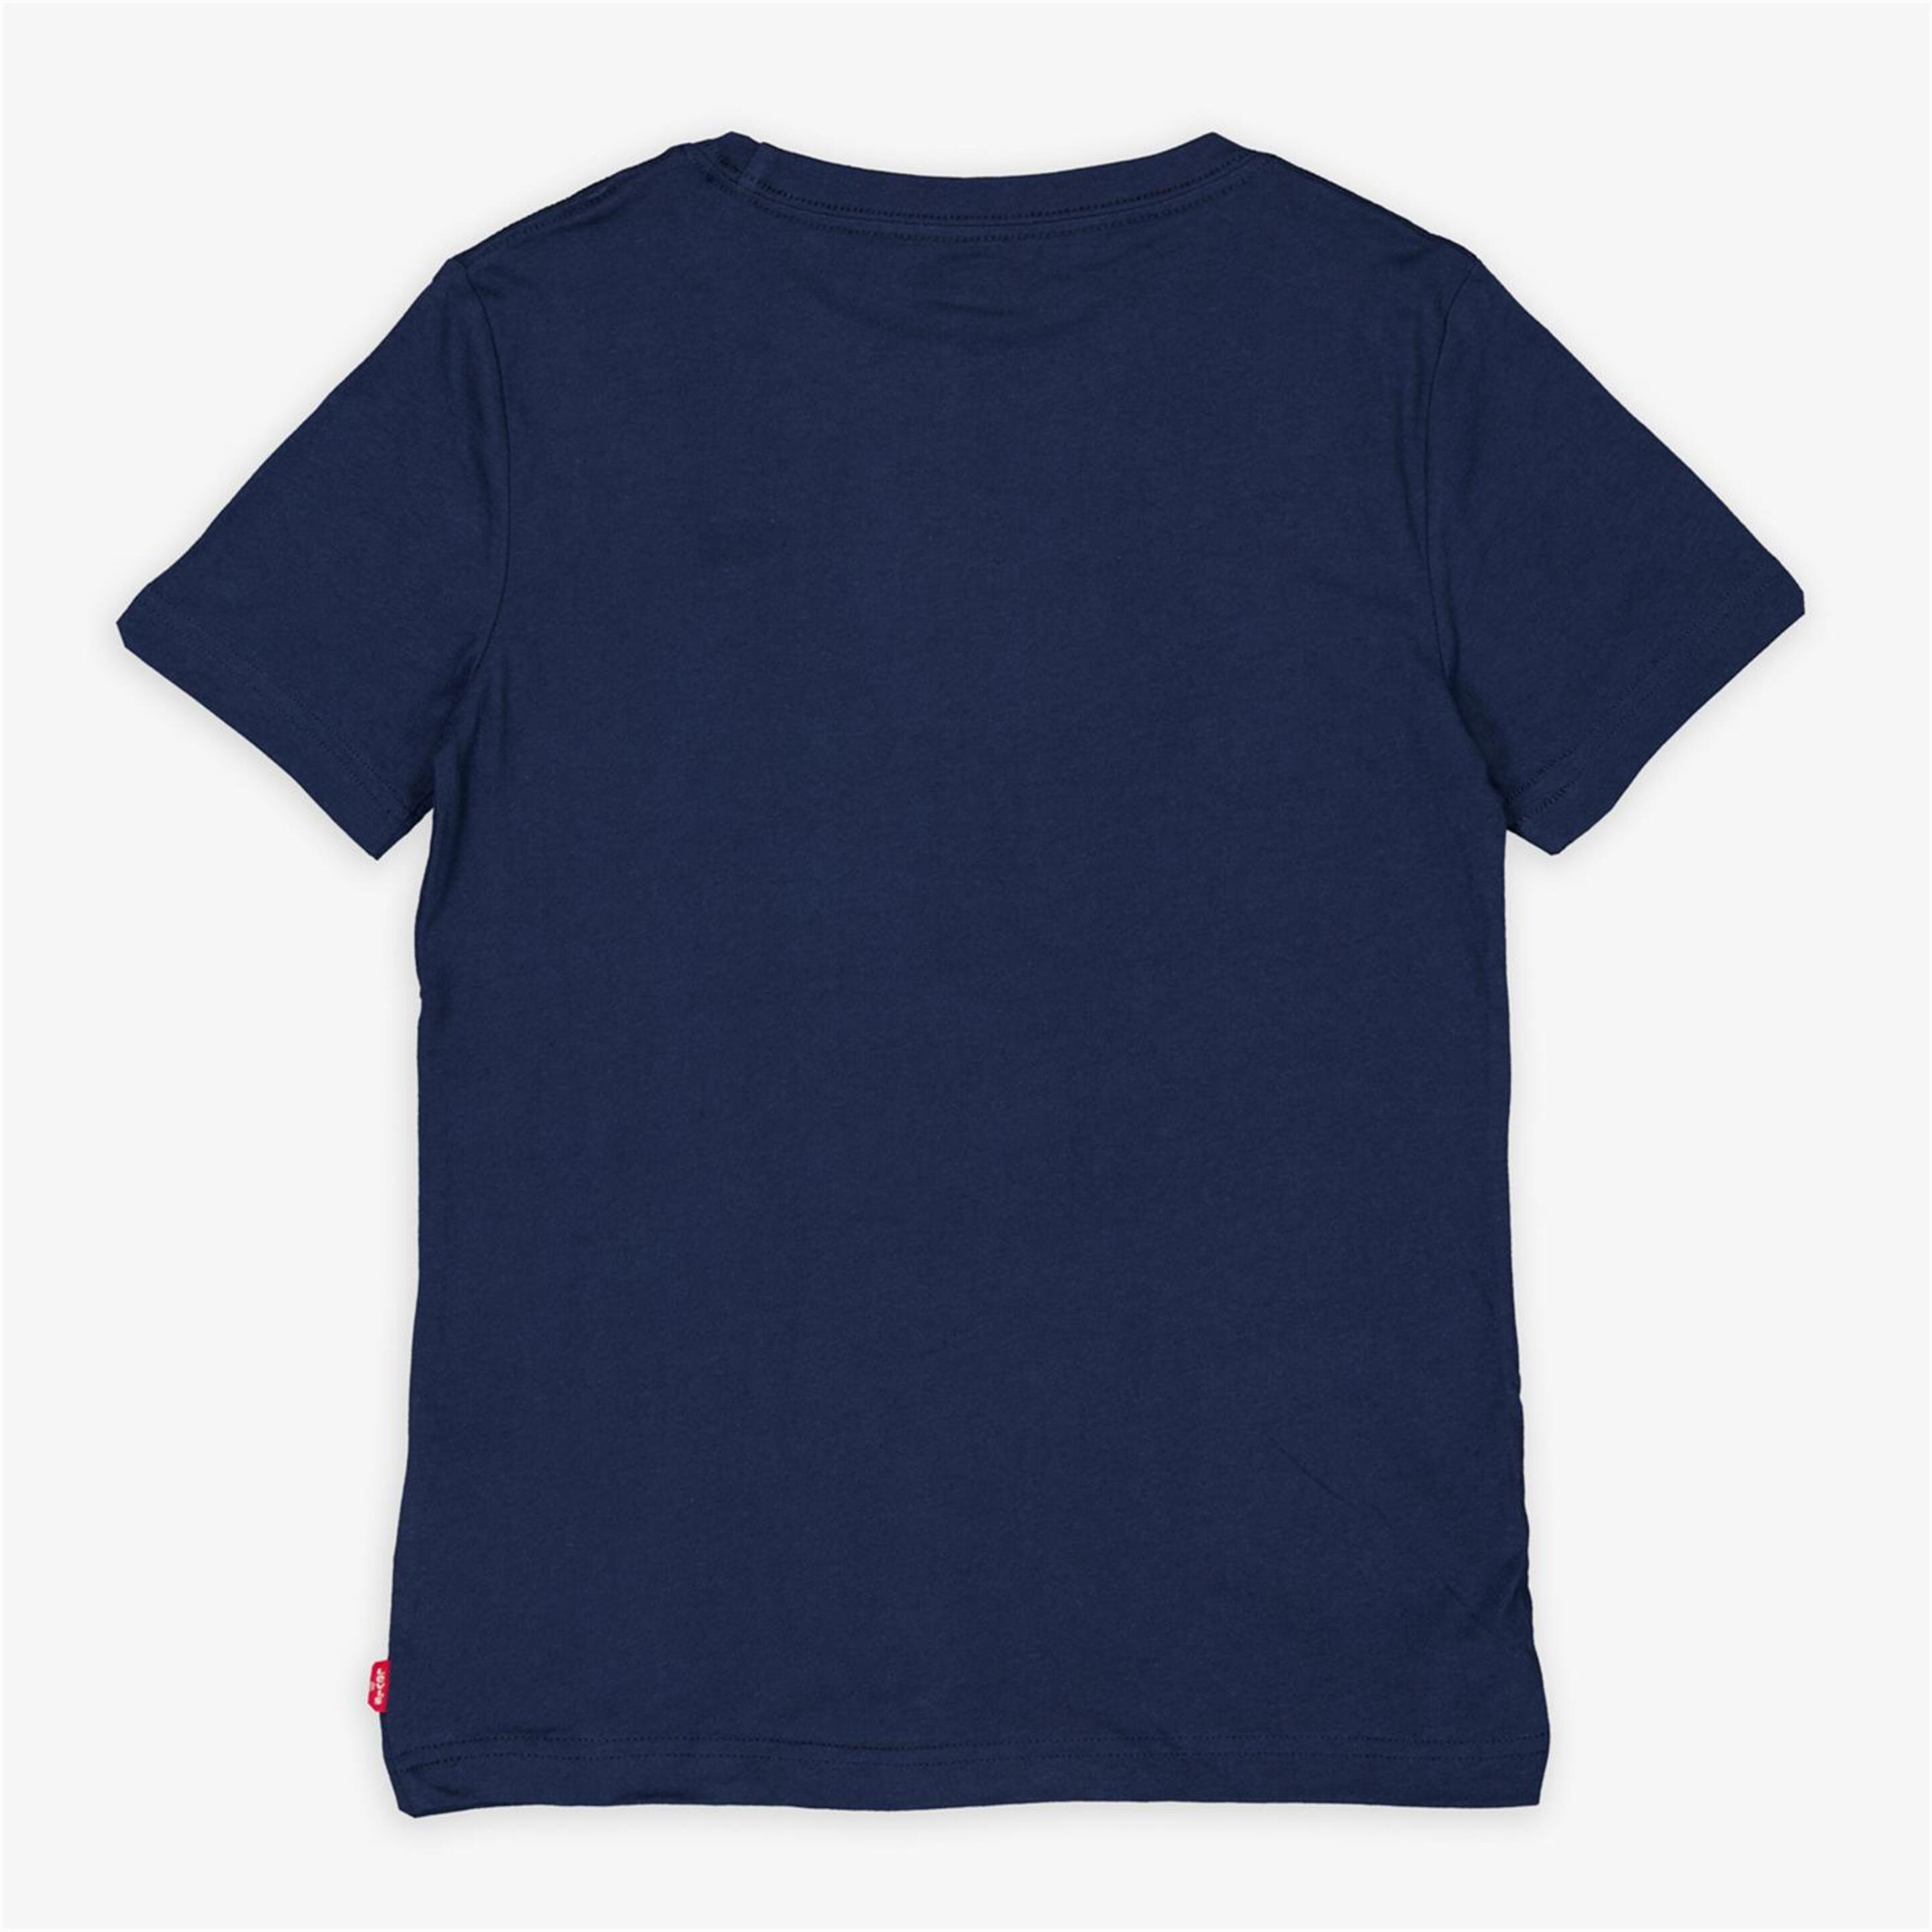 Camiseta Levi's - Marino - Camiseta Niño